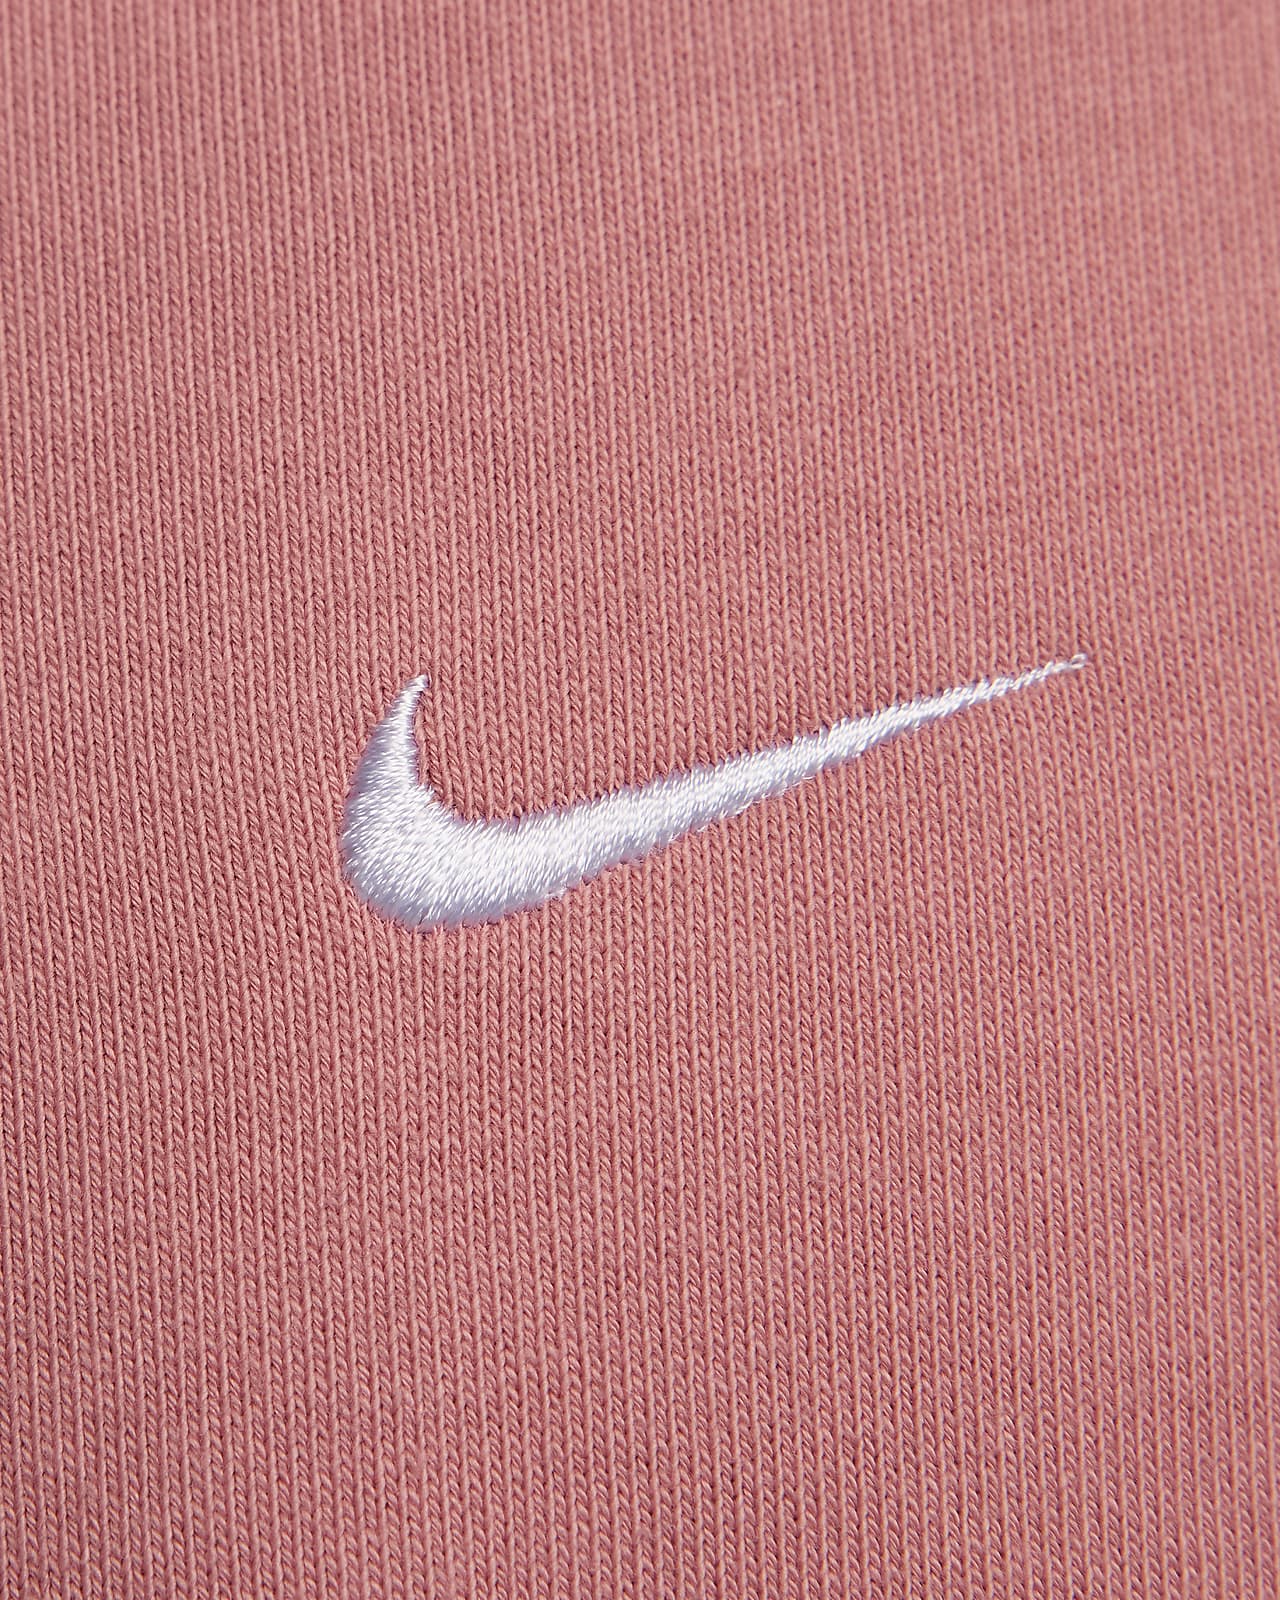 Nike Solo Swoosh Men's 1/4-Zip Top. Nike CA